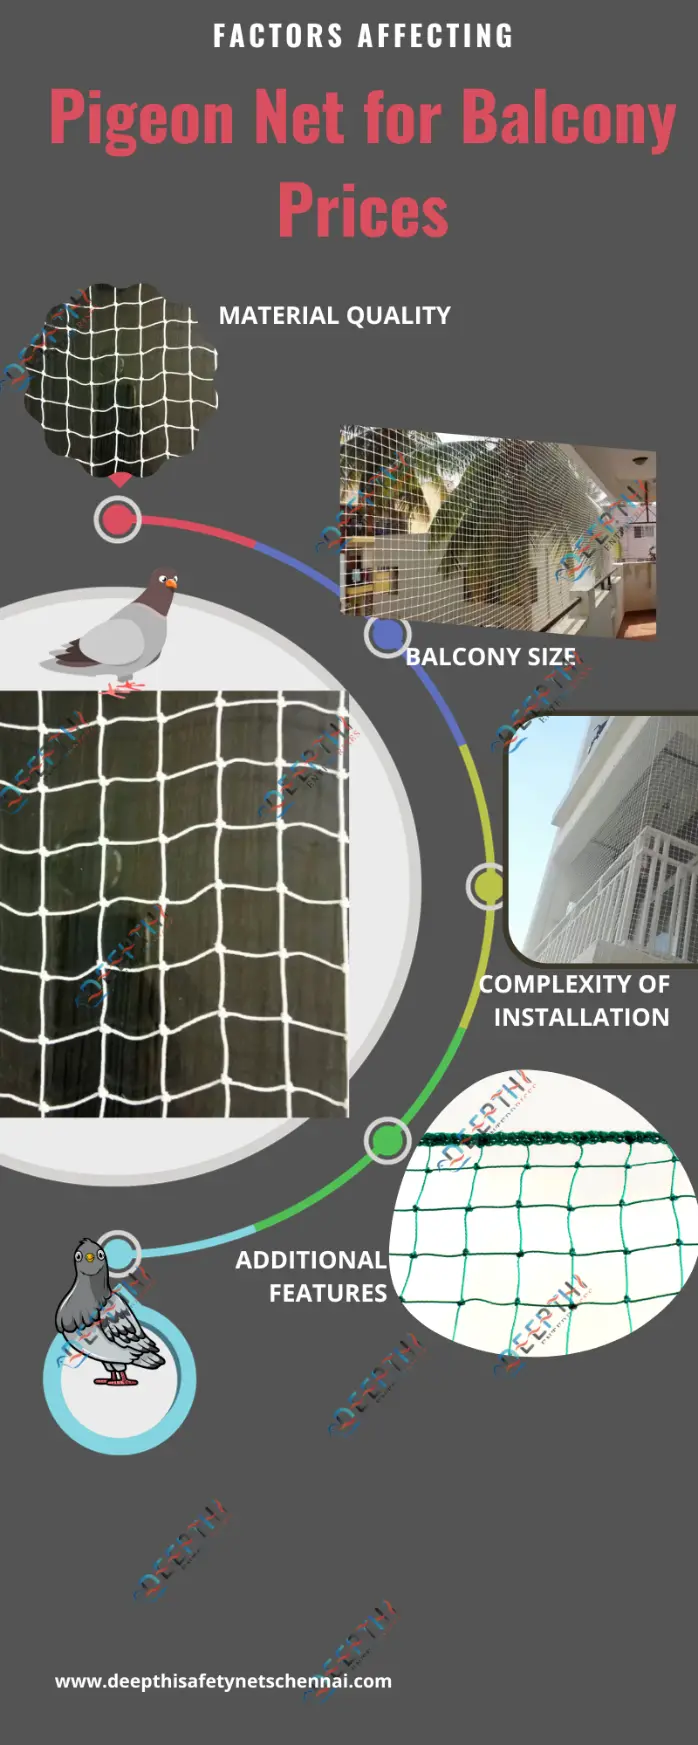 Pigeon Net for Balcony Price